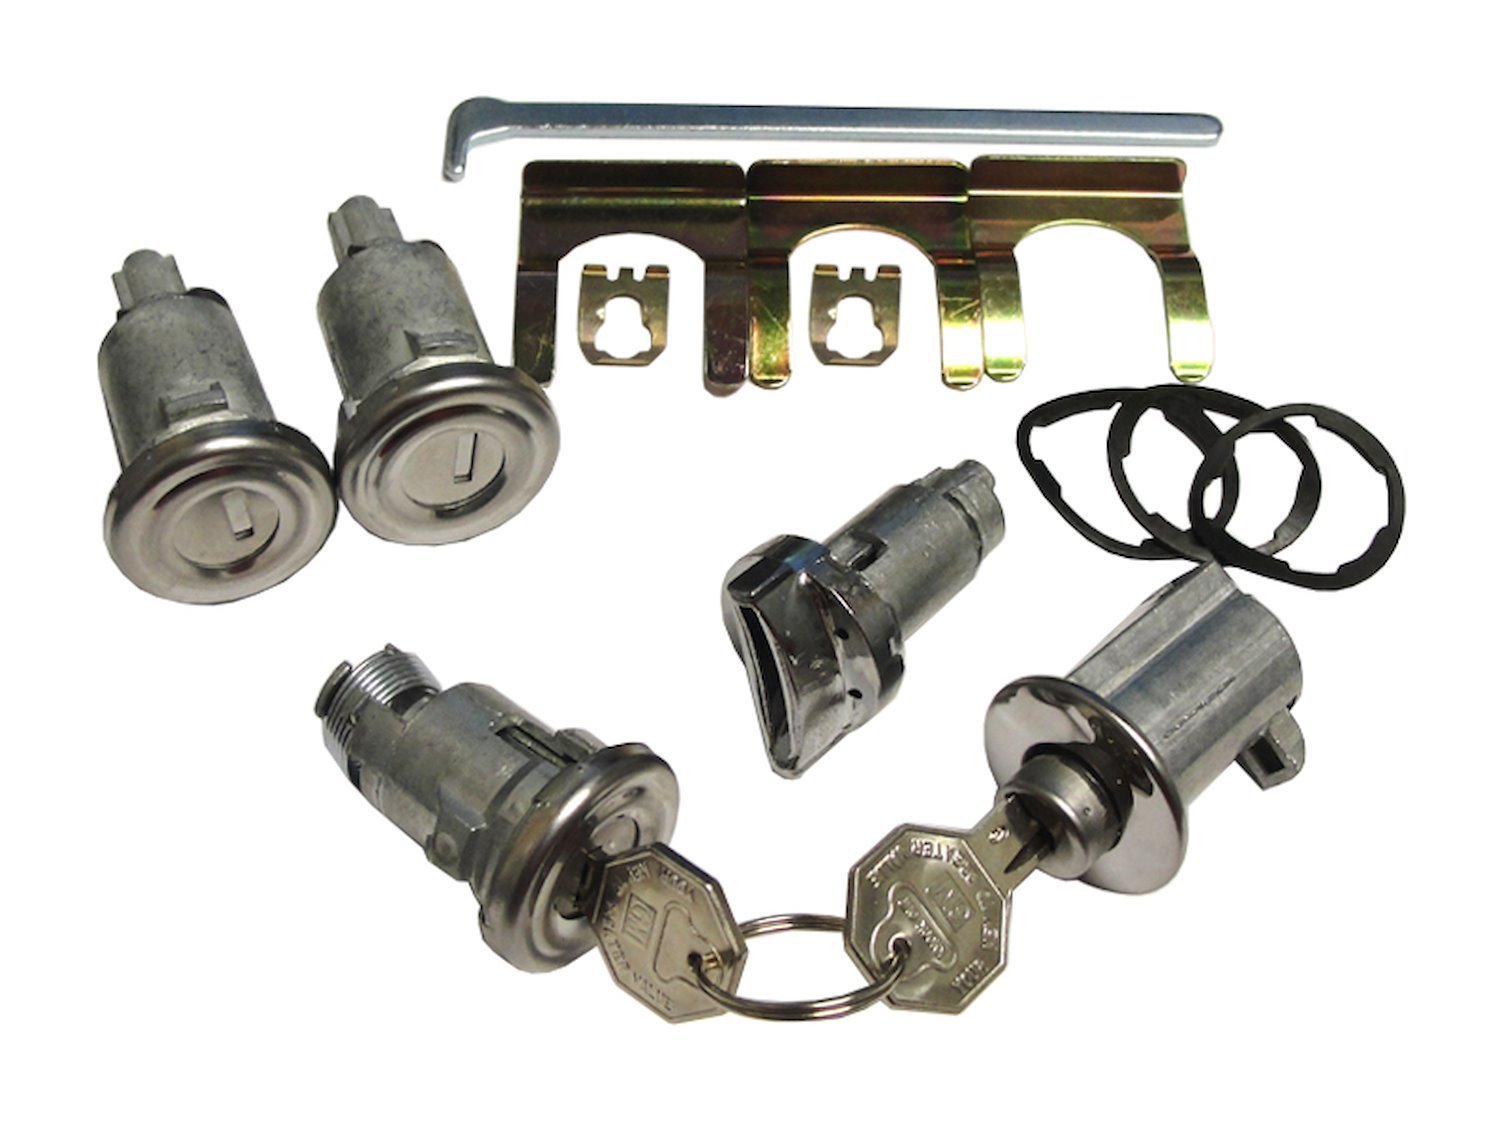 Ignition, Door, Trunk & Glovebox Lock Set Fits Select 1958 GM Models With Long Shaft Cylinders [Original Octagon Keys]